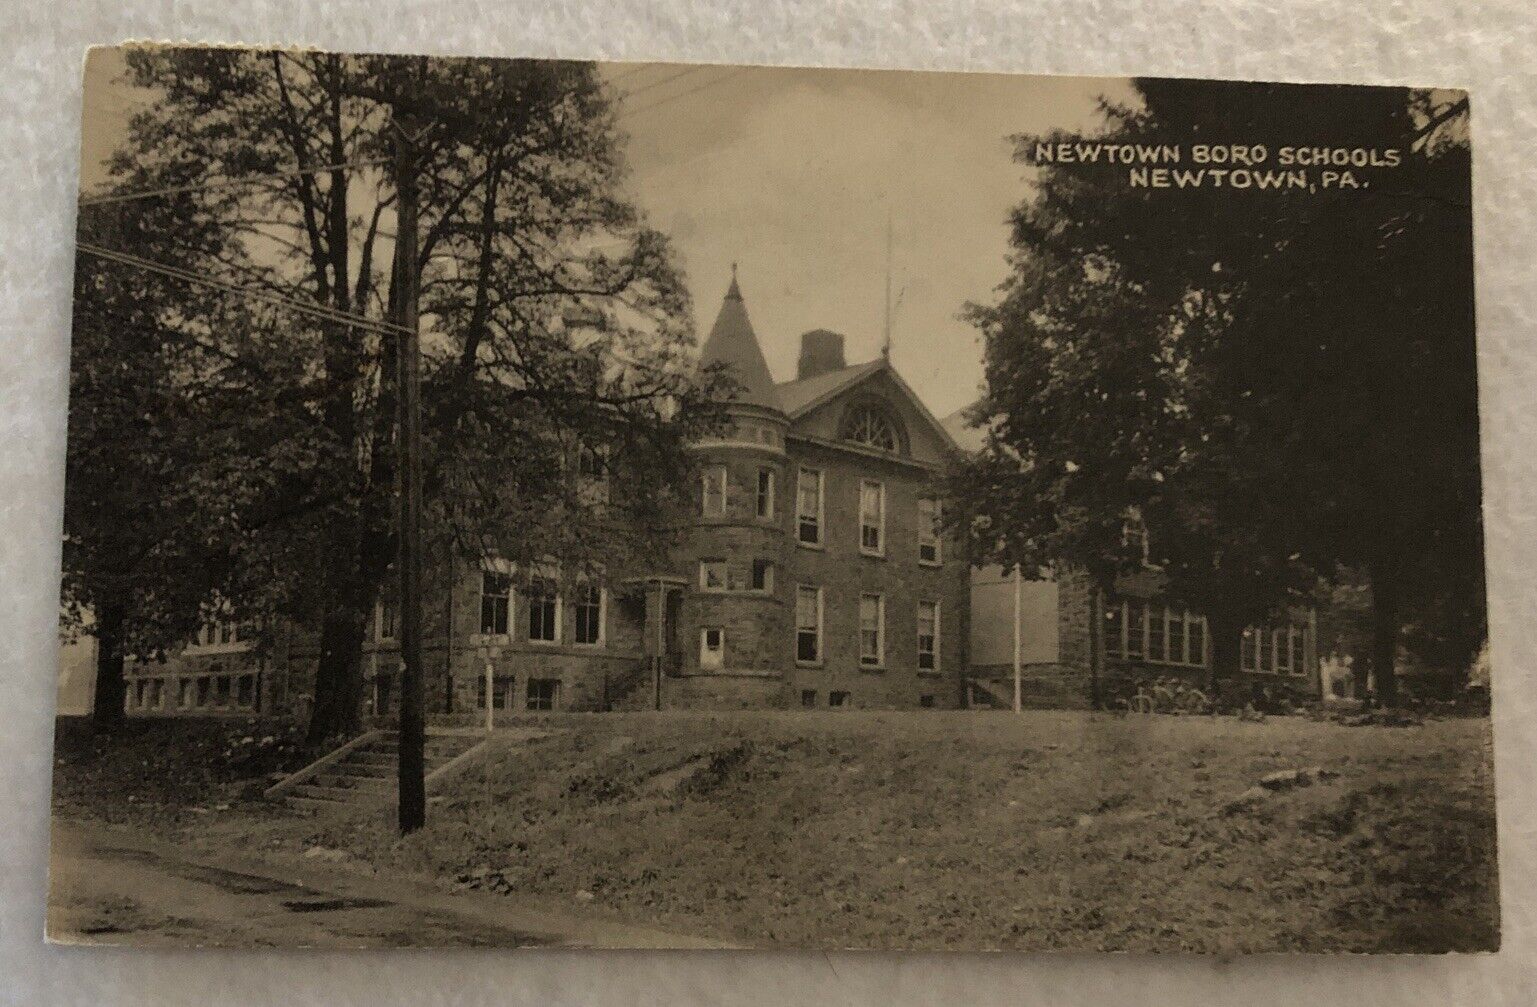 Newtown Boro Schools Newtown, Pennsylvania Postcard (D1)